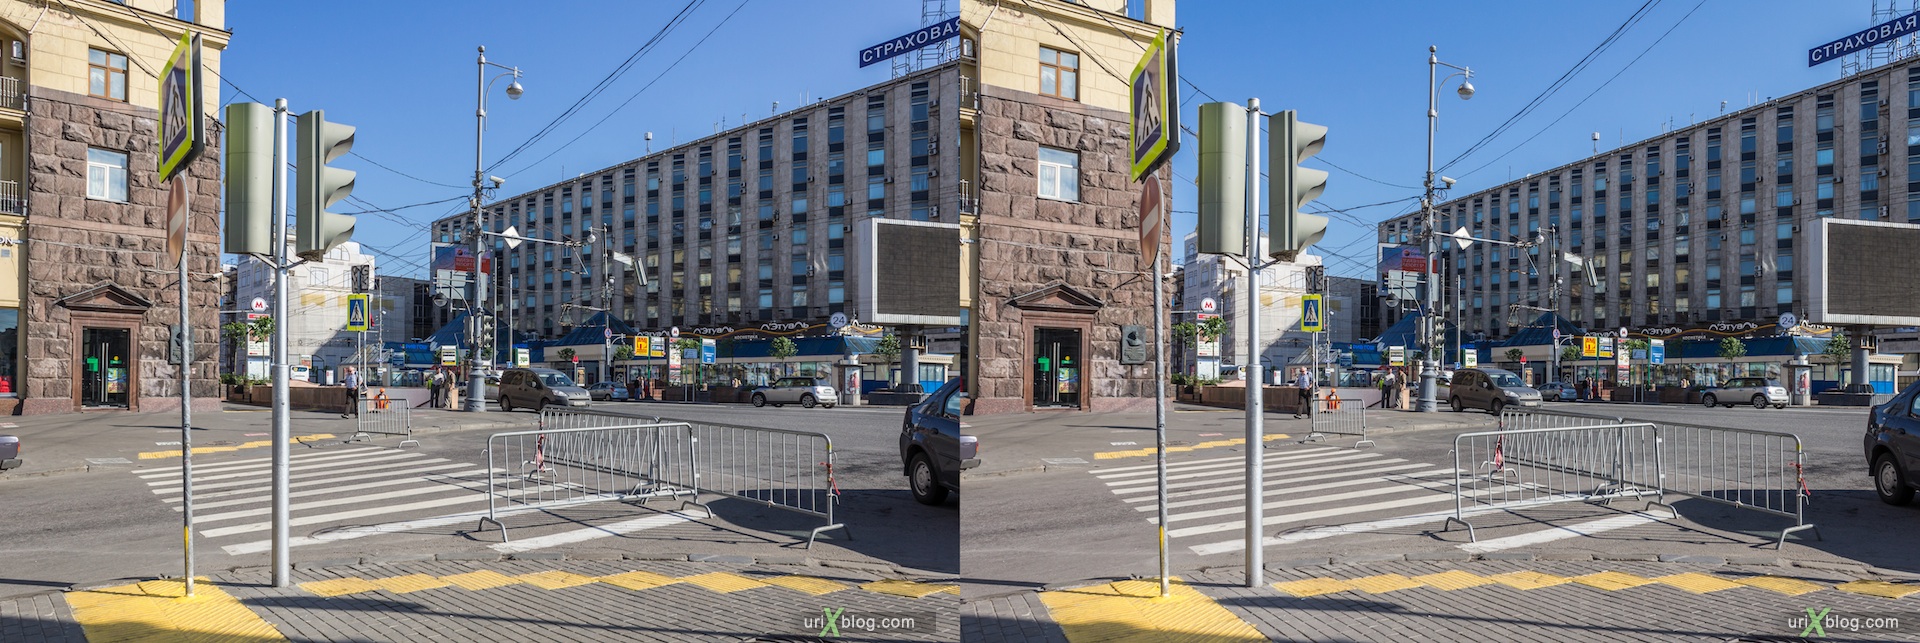 2013, Big Bronnaya street, Pushkin square, Tverskaya, street, Moscow, Russia, 3D, stereo pair, cross-eyed, crossview, cross view stereo pair, stereoscopic